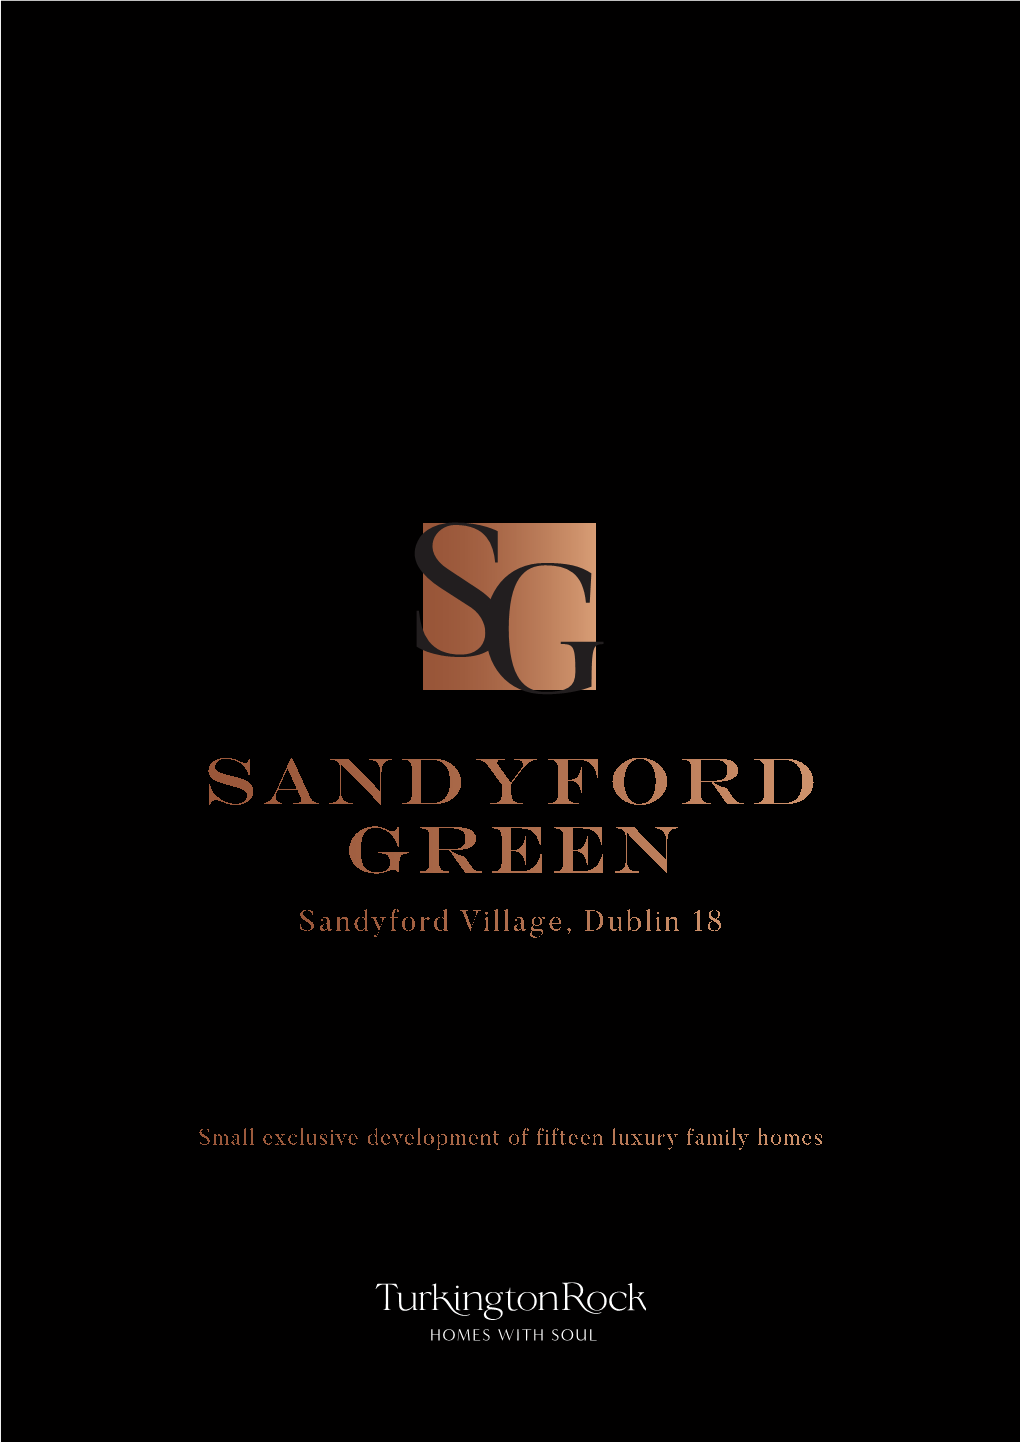 Sandyford Green Sandyford Village, Dublin 18